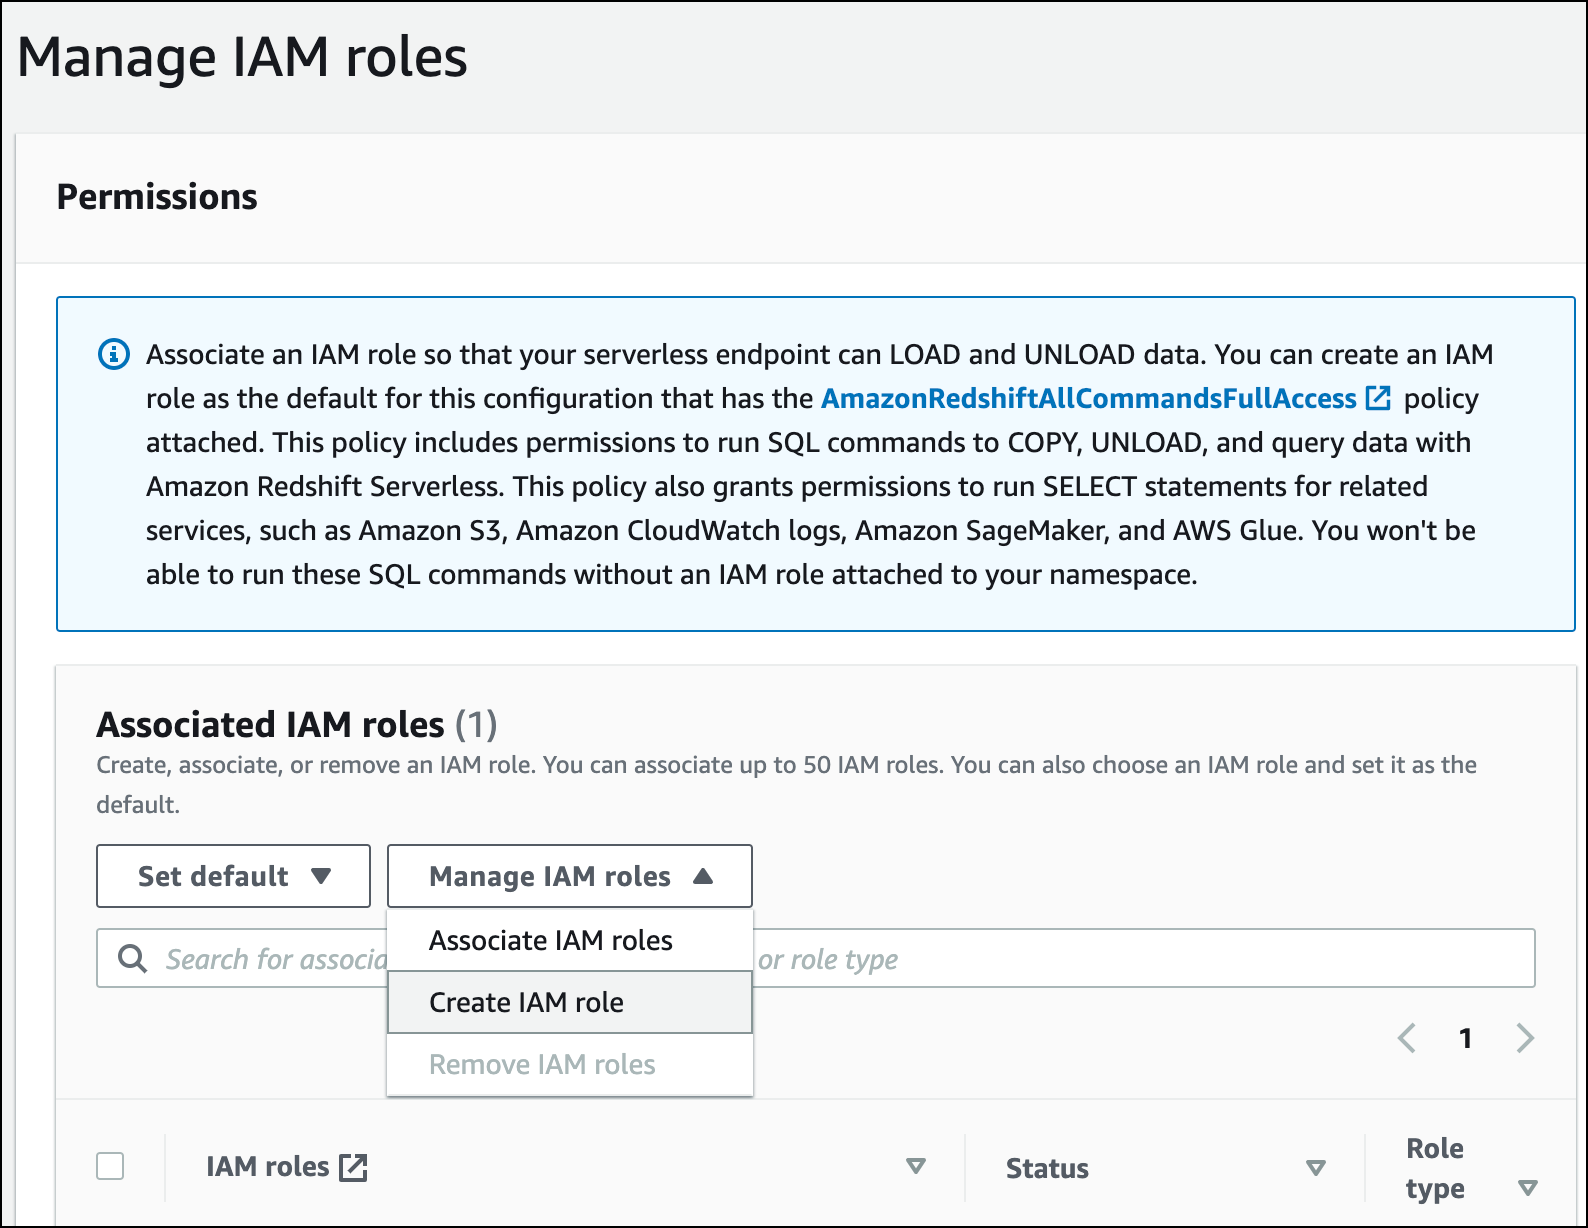 Expand the Manage IAM roles menu, and choose Create IAM role.